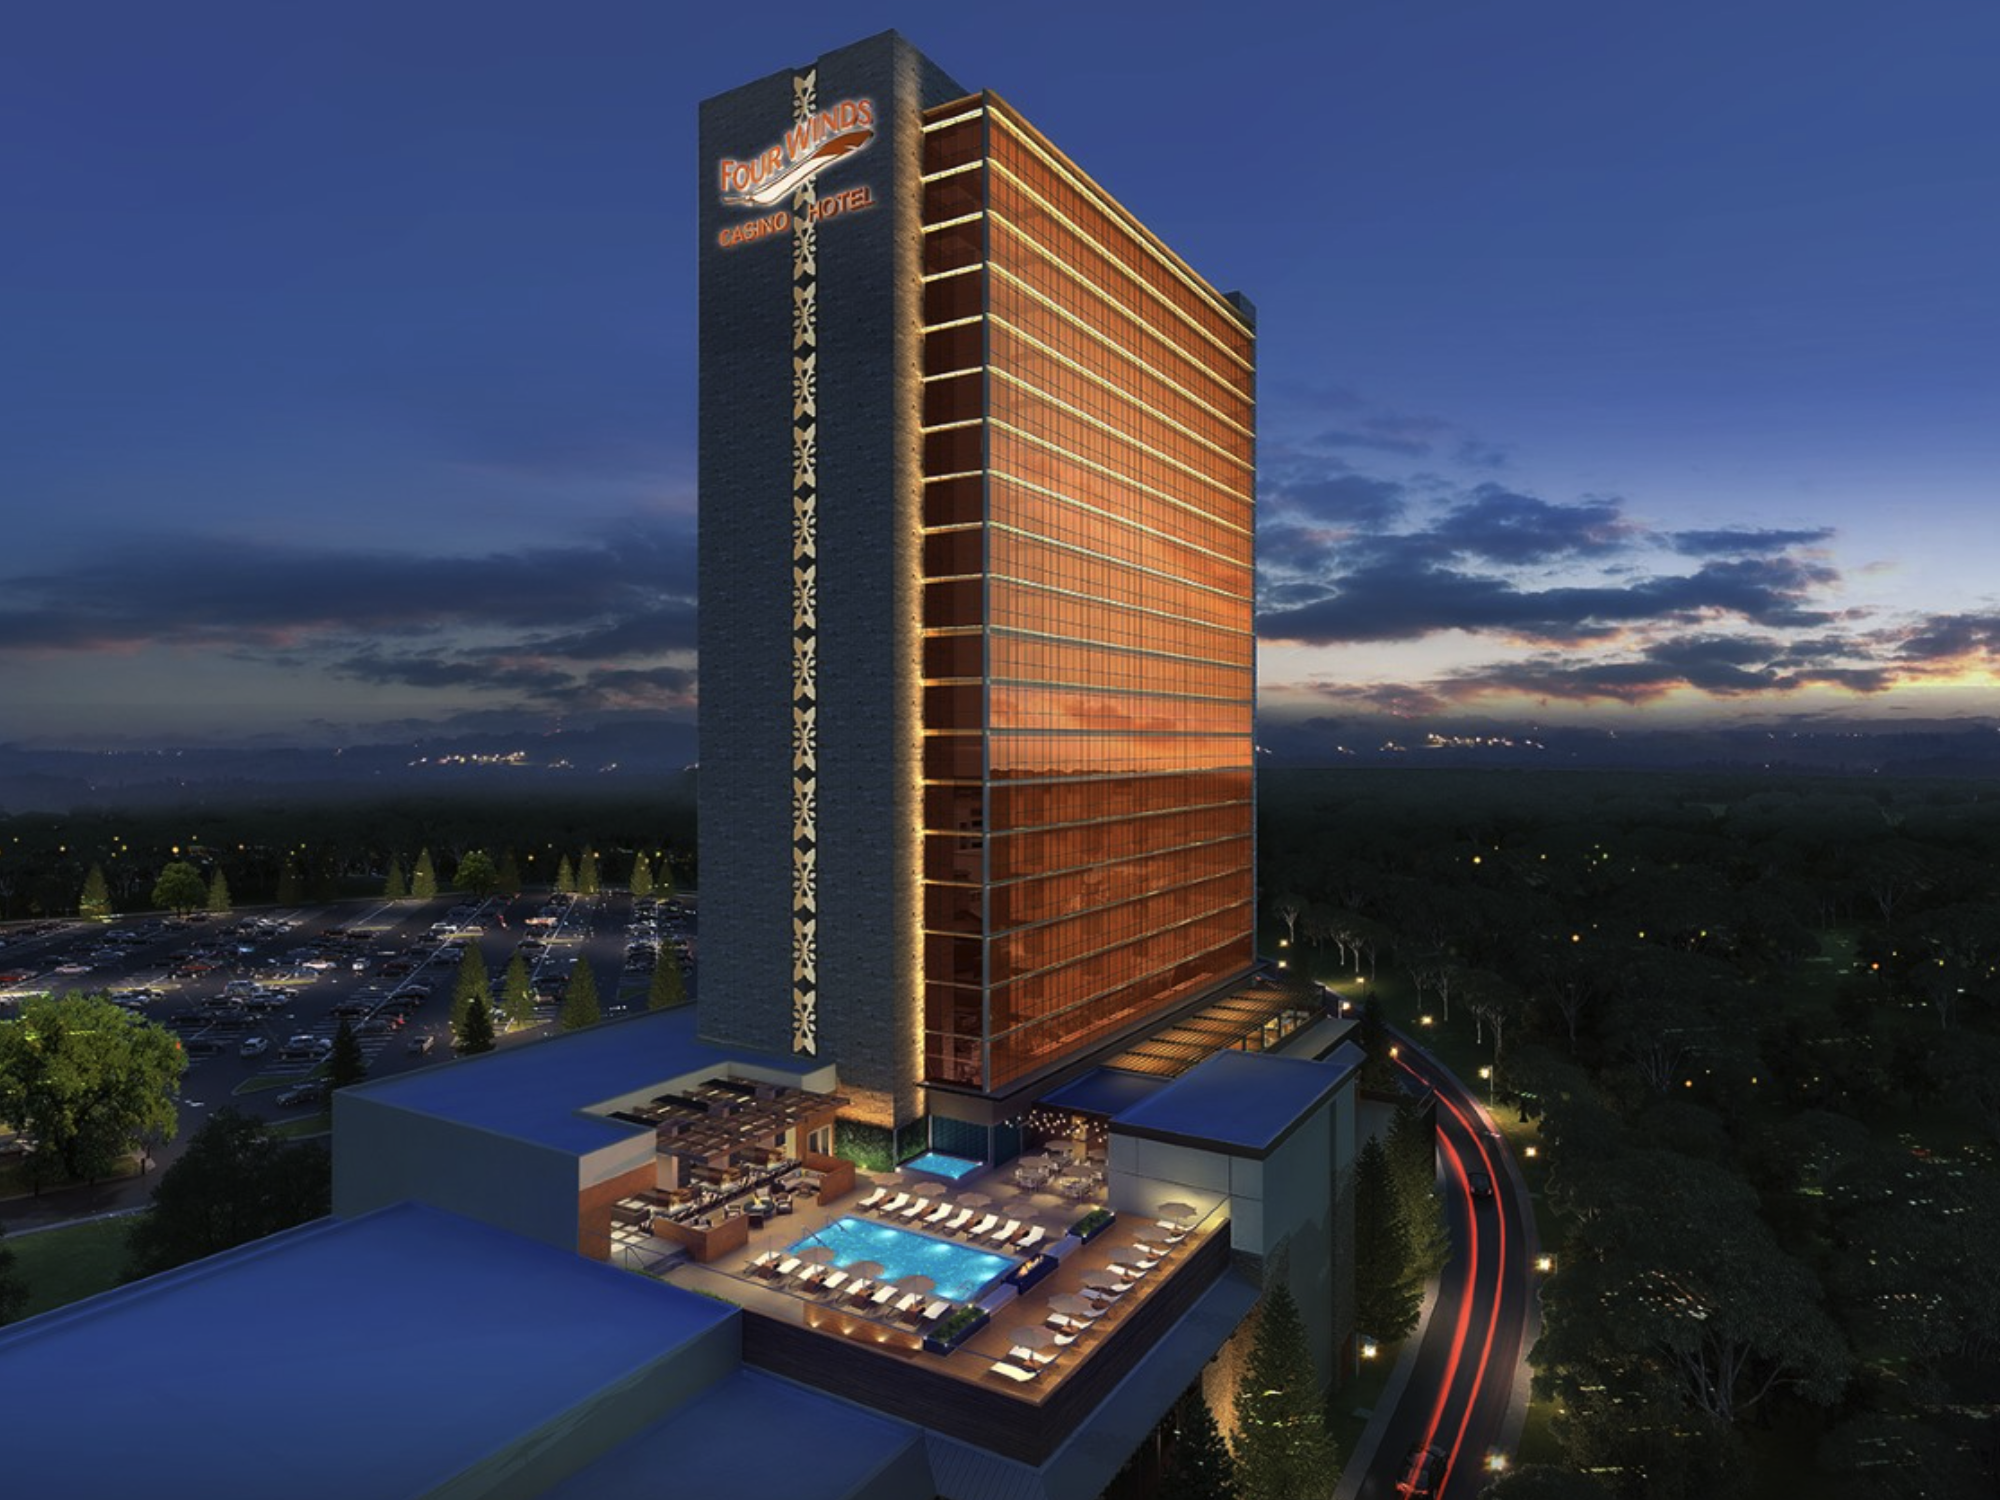 Four Winds South Bend Points ke Tahun Depan untuk Hotel di Indiana Tribal Casino